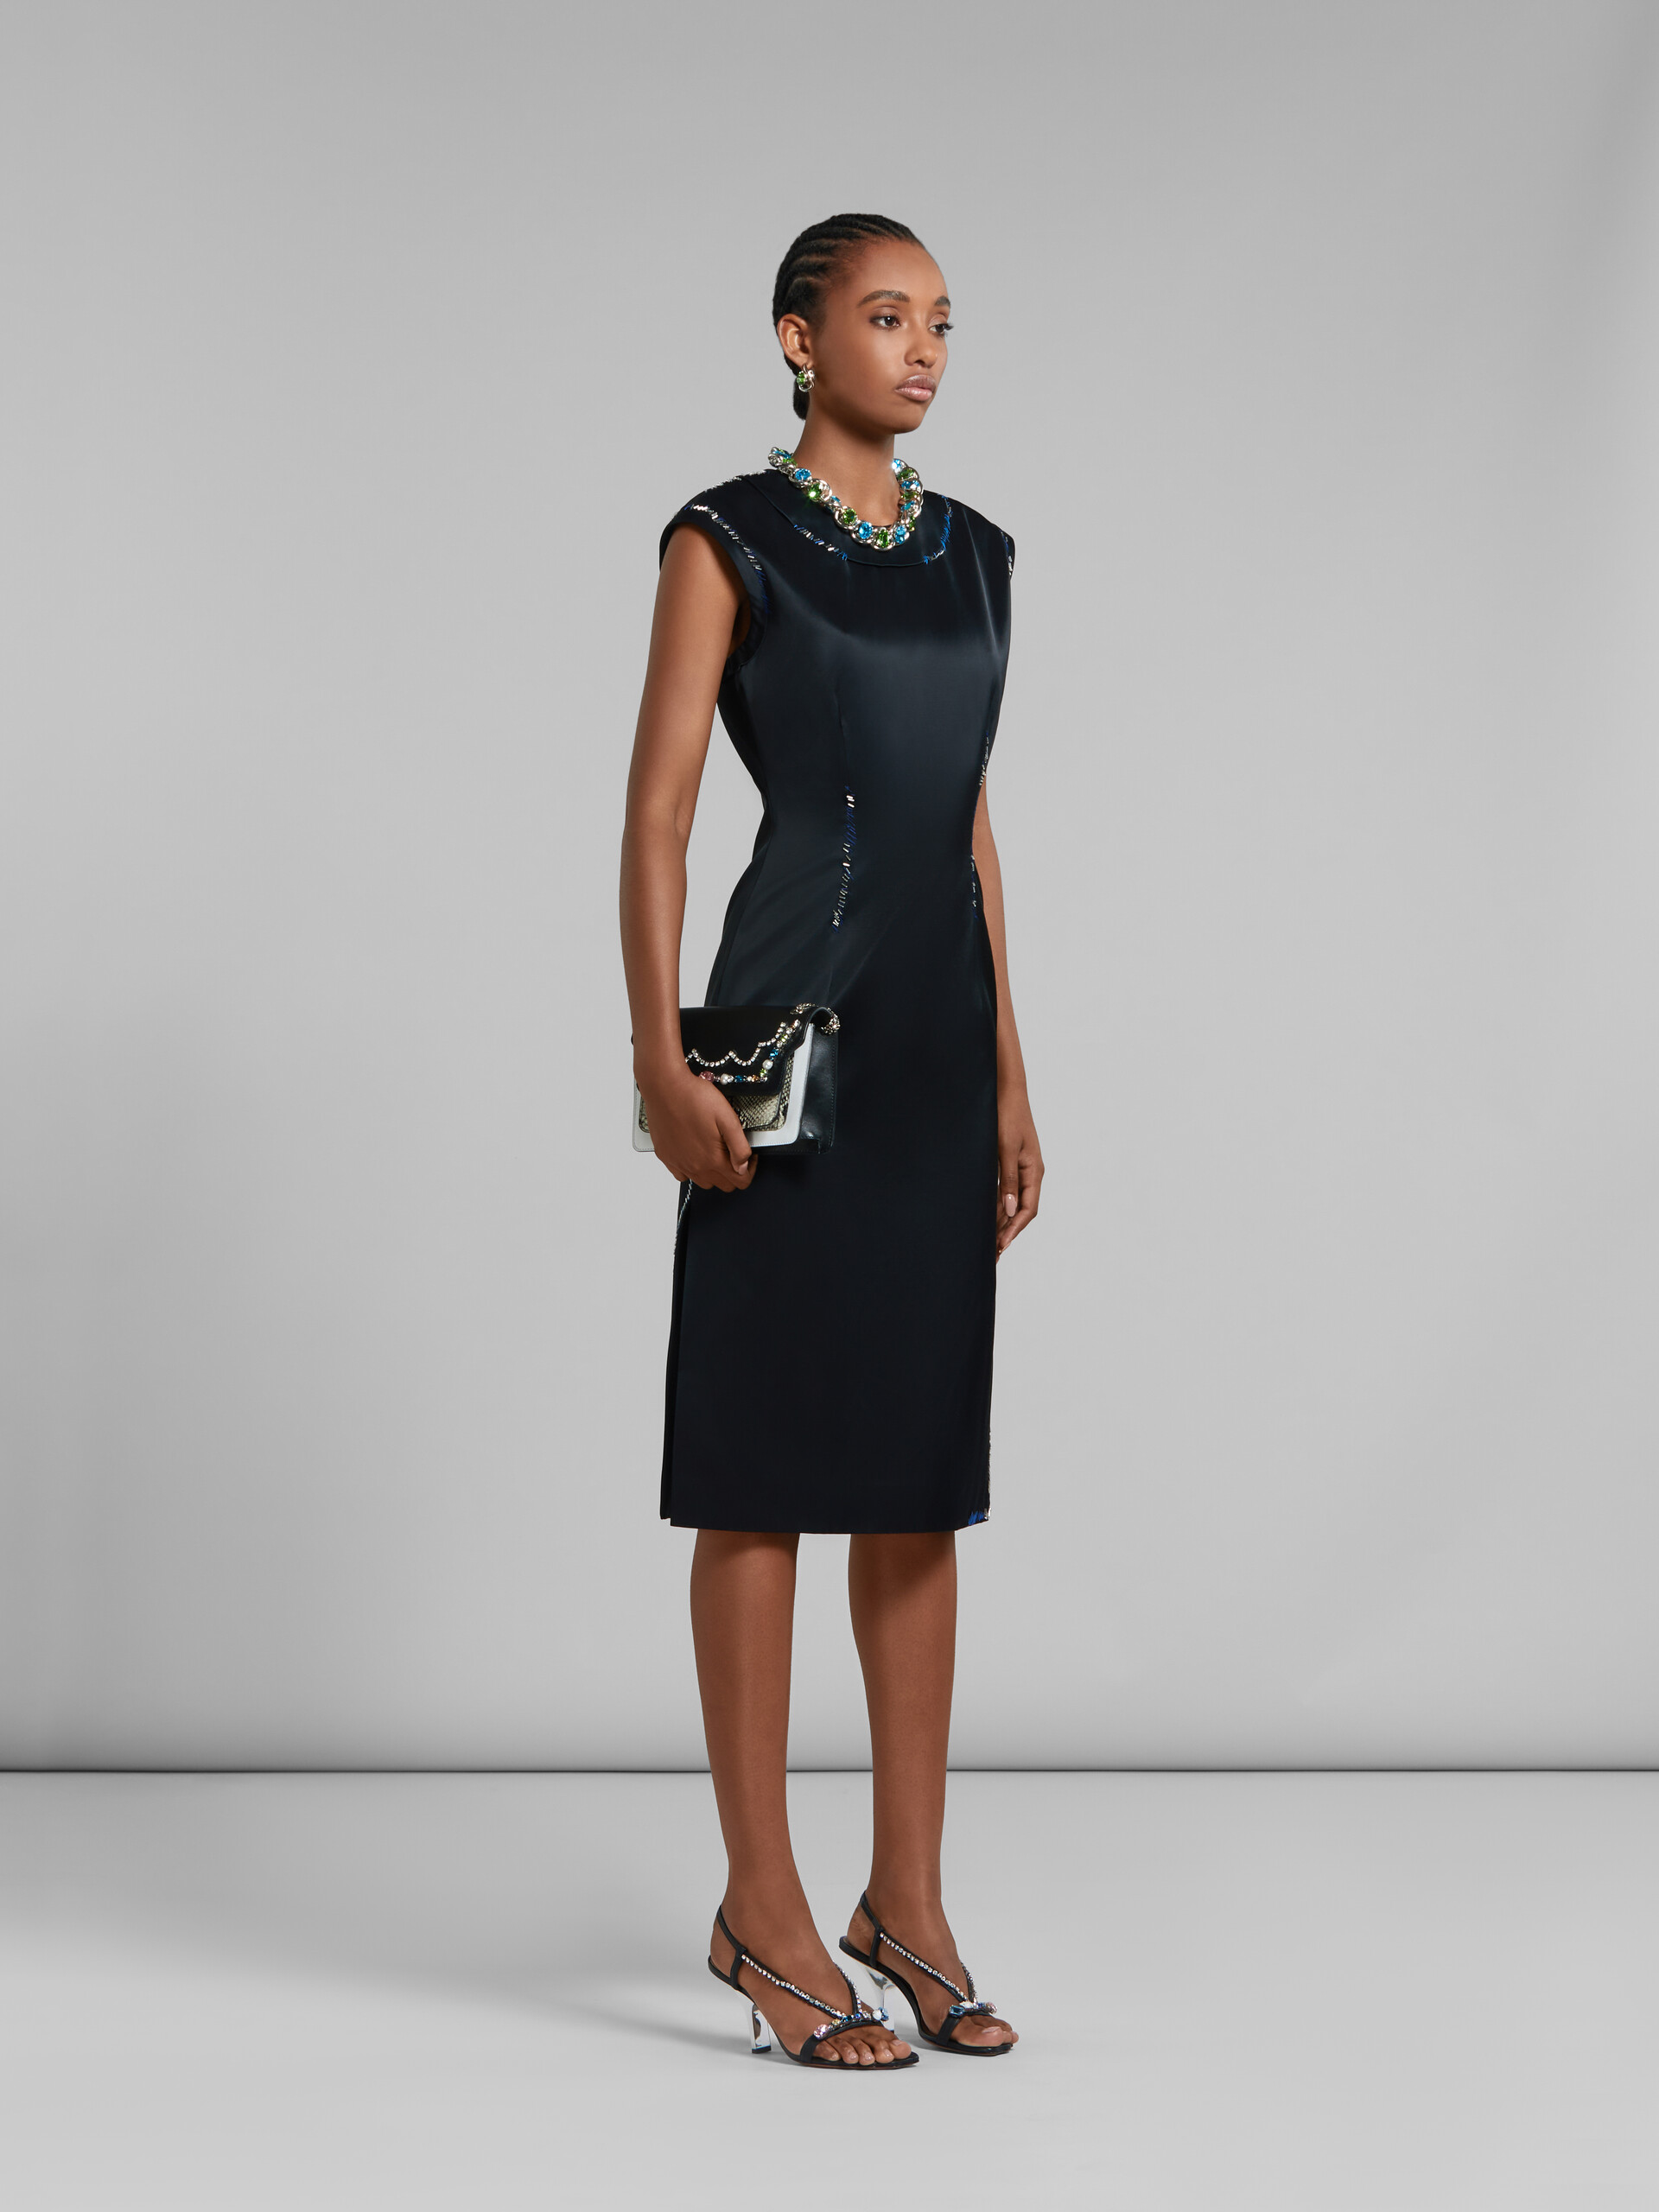 Robe fourreau en satin duchesse noir avec effet raccommodé en perles - Robes - Image 6